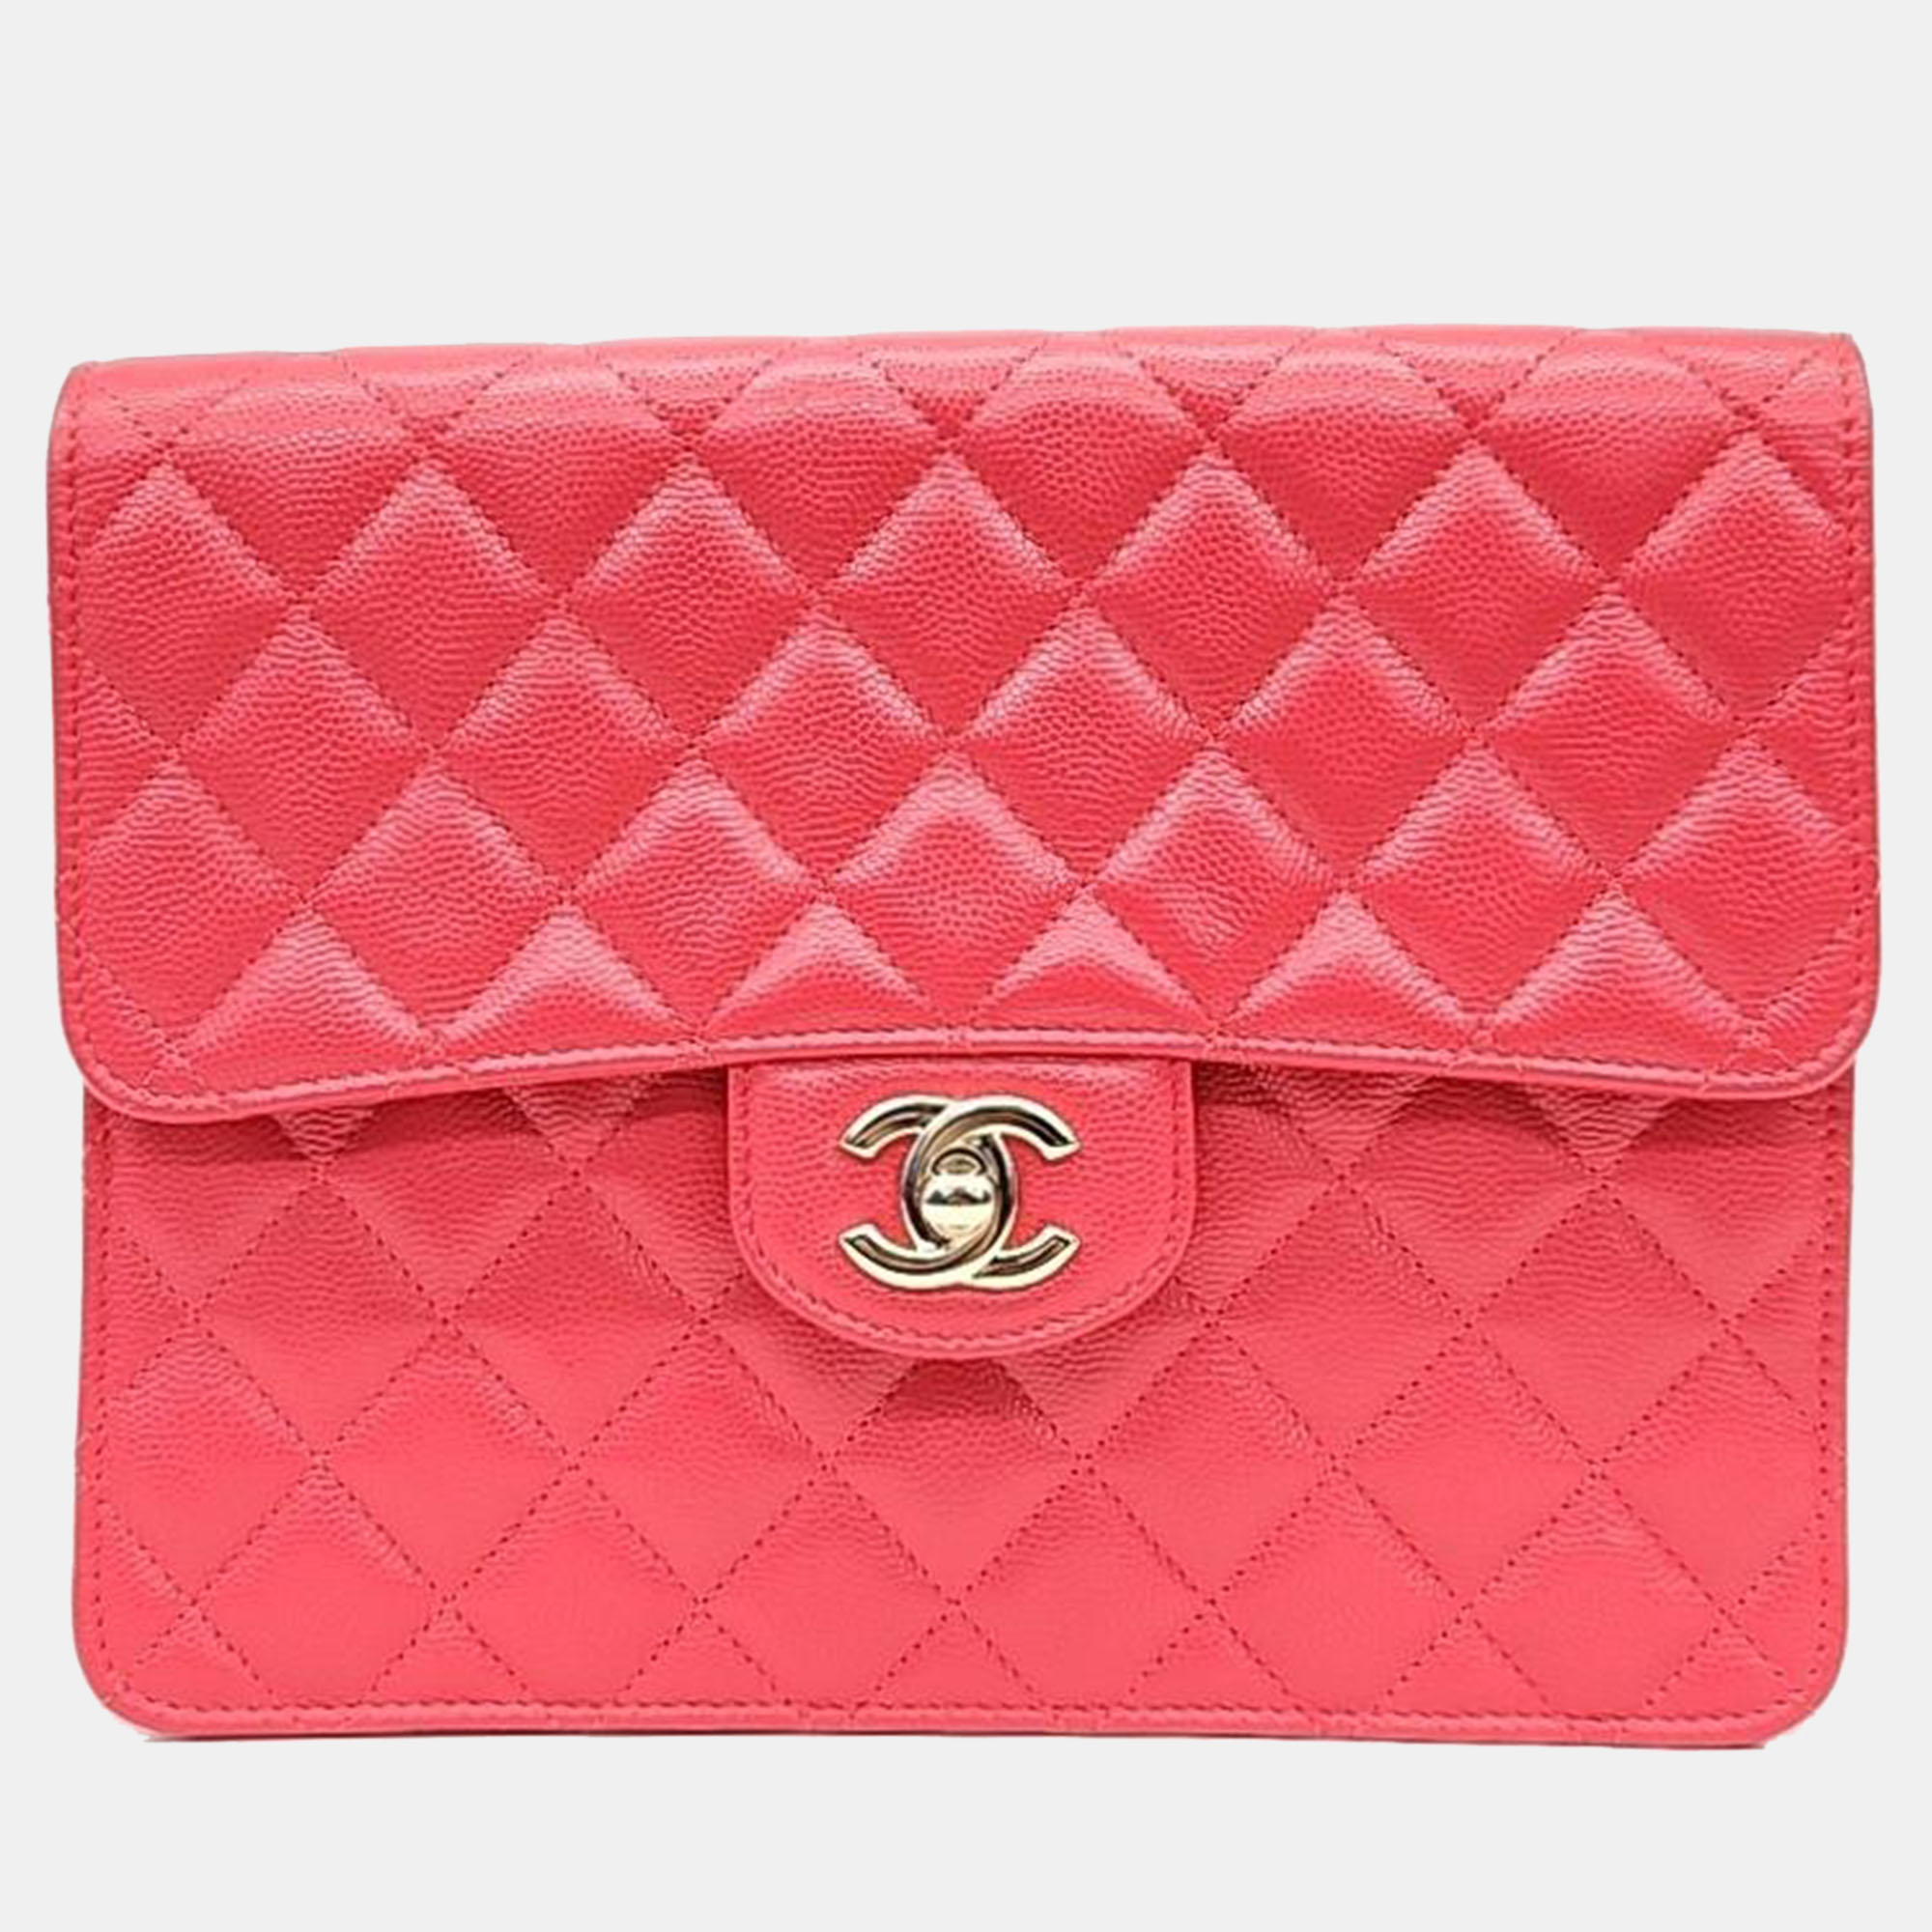 Chanel caviar pink flap clutch